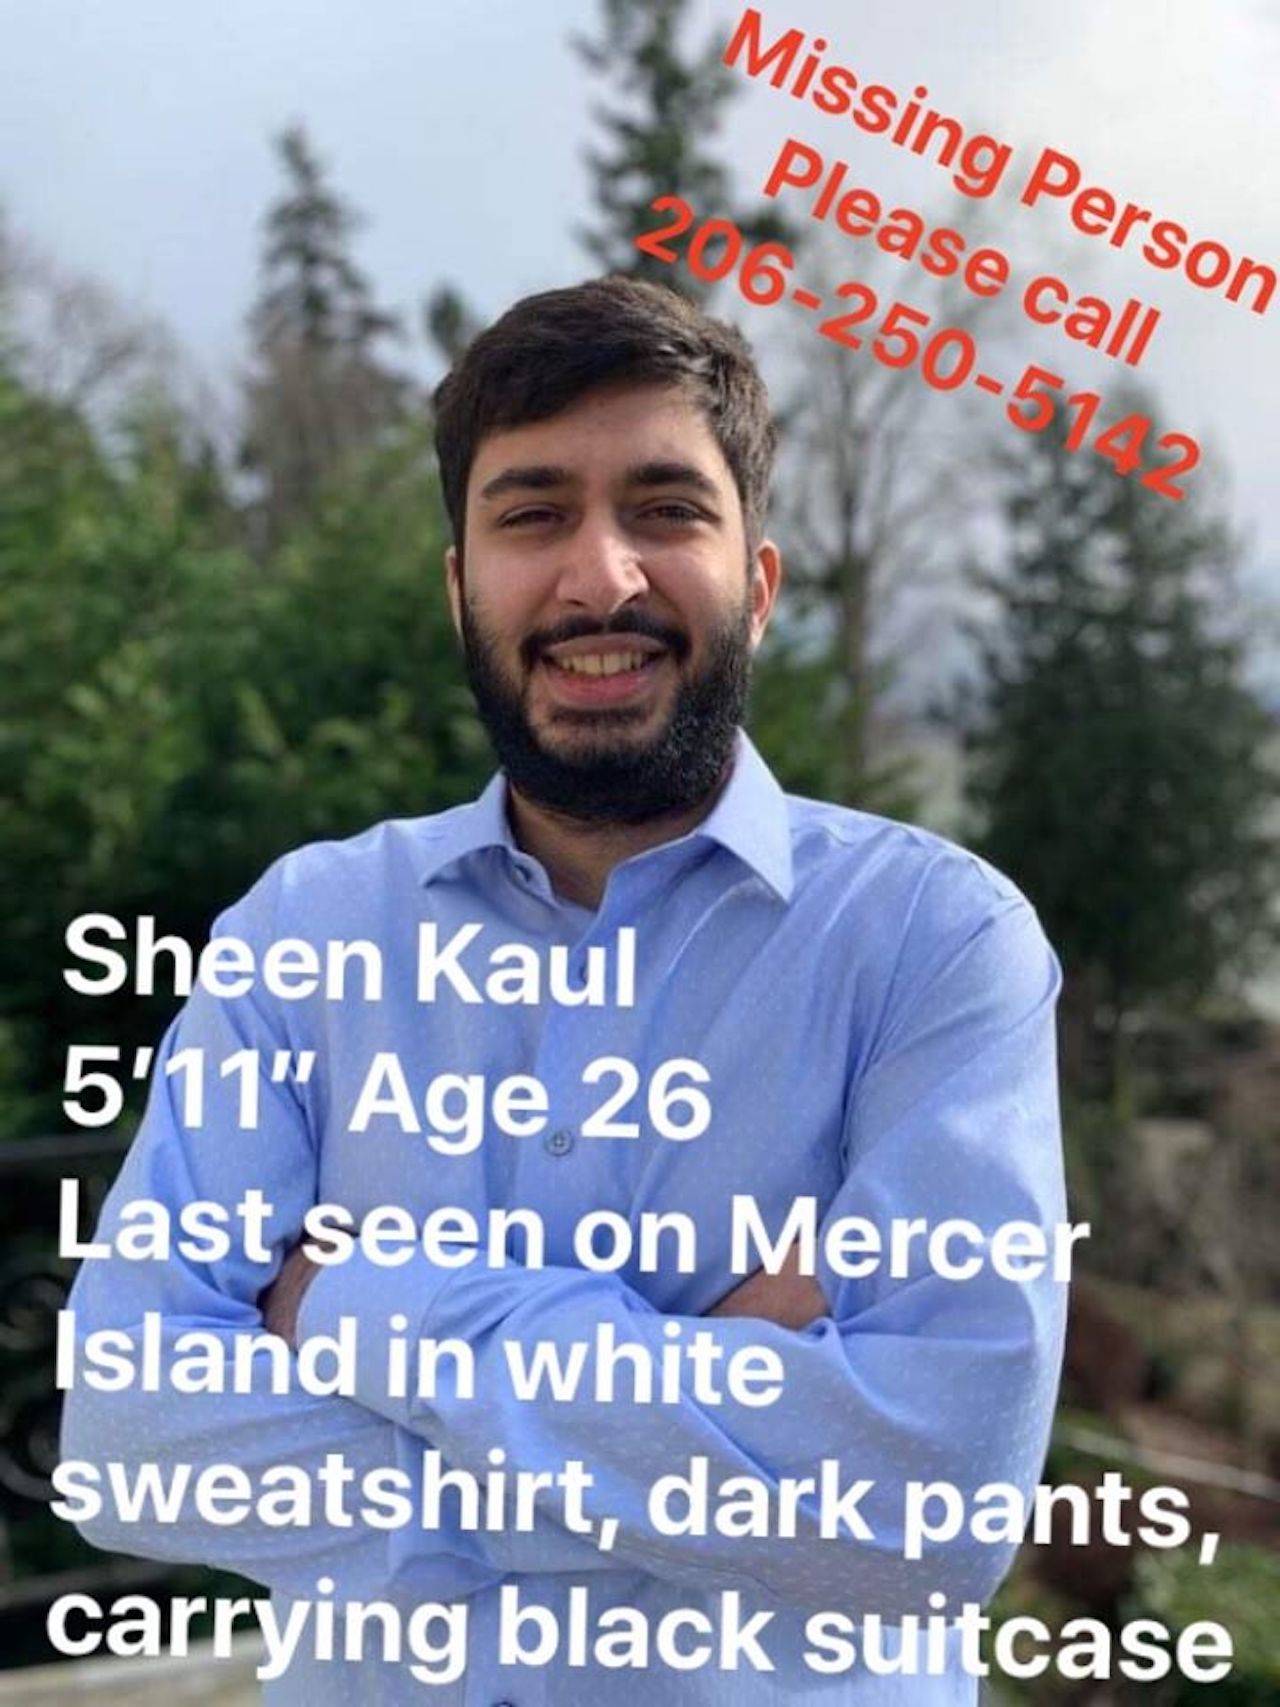 Sheen Kaul had been missing since July 12. Photo courtesy Shaarika Kaul’s Facebook page